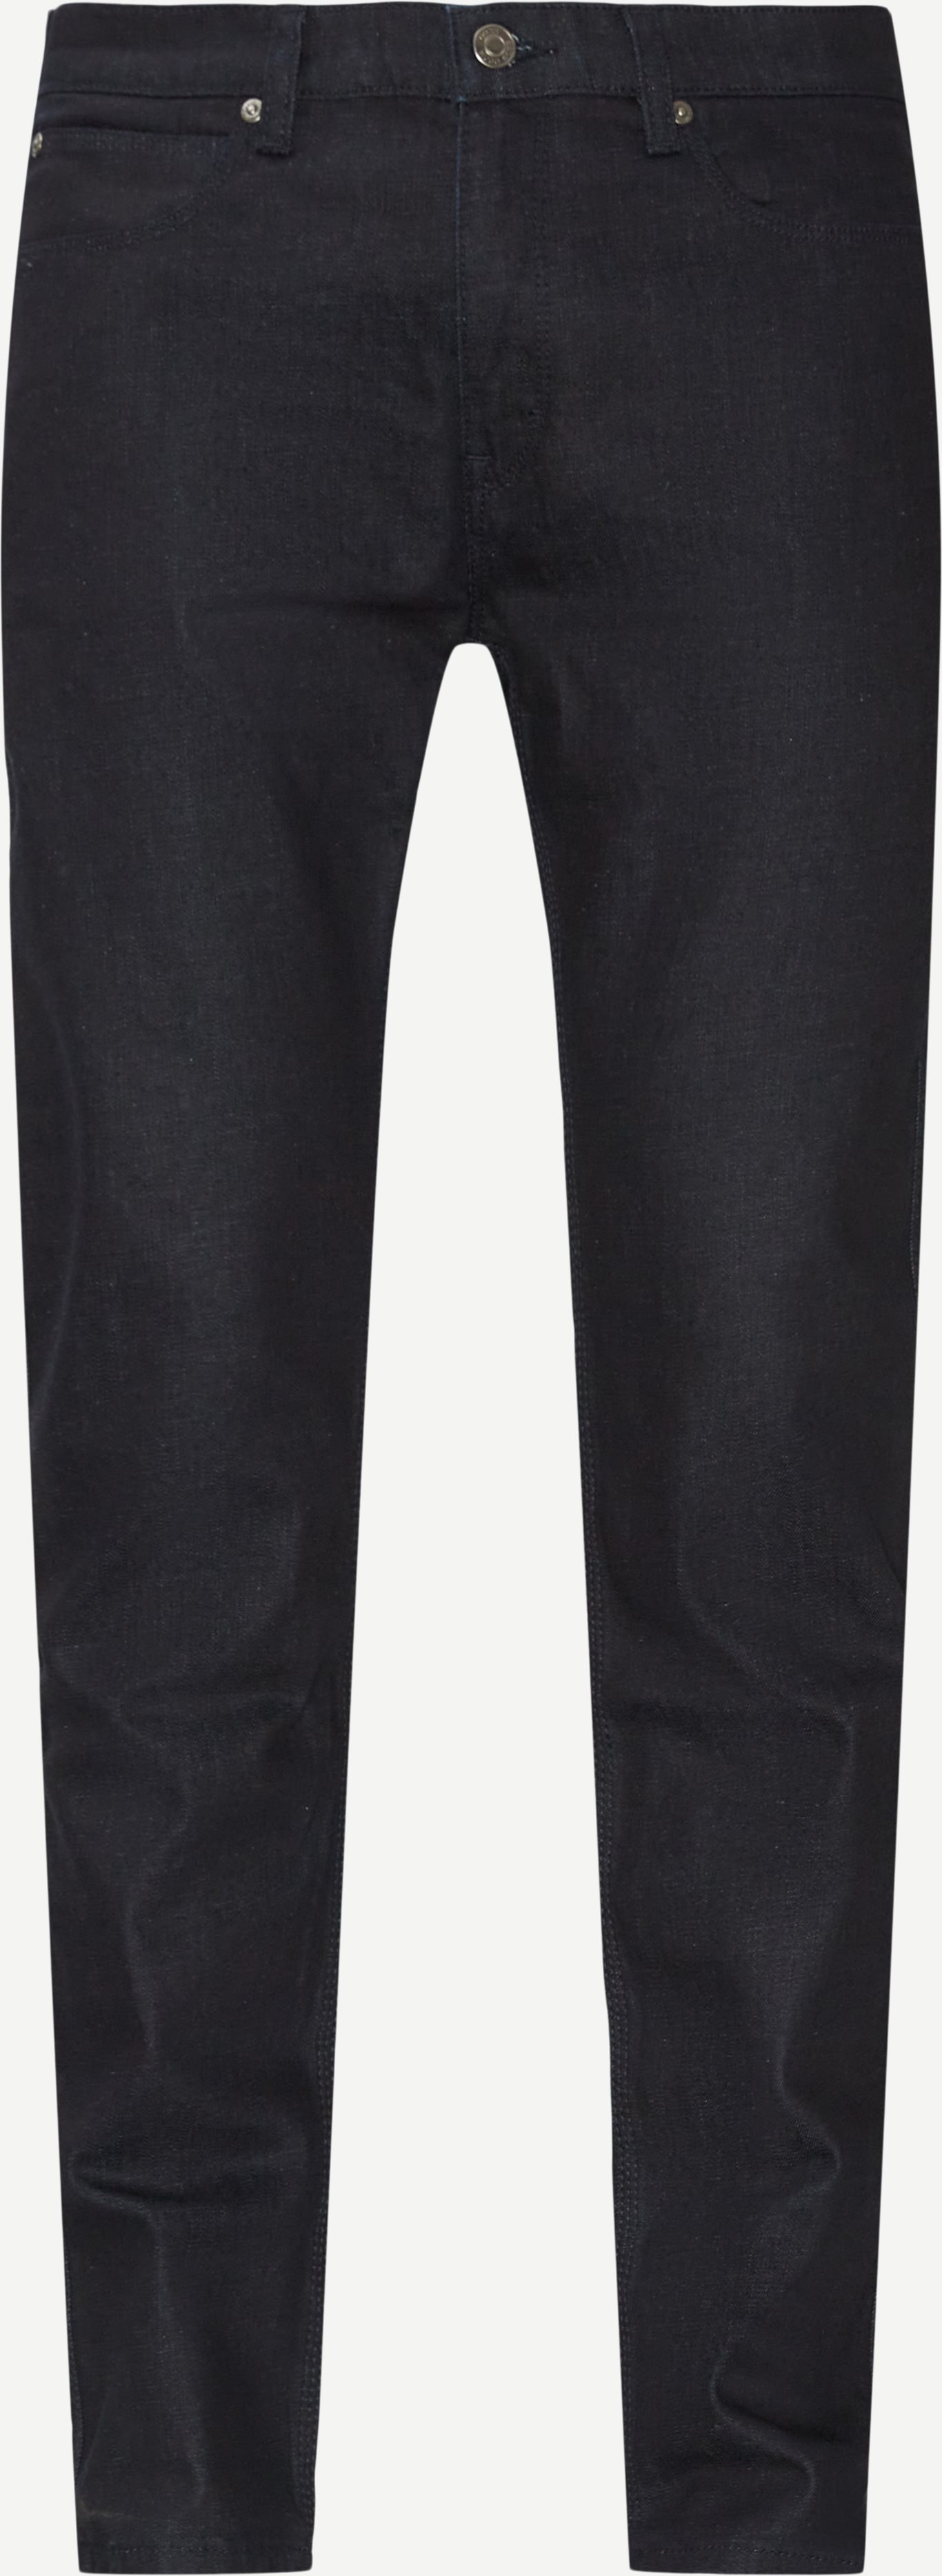 Hugo 708 Jeans - Jeans - Slim fit - Denim